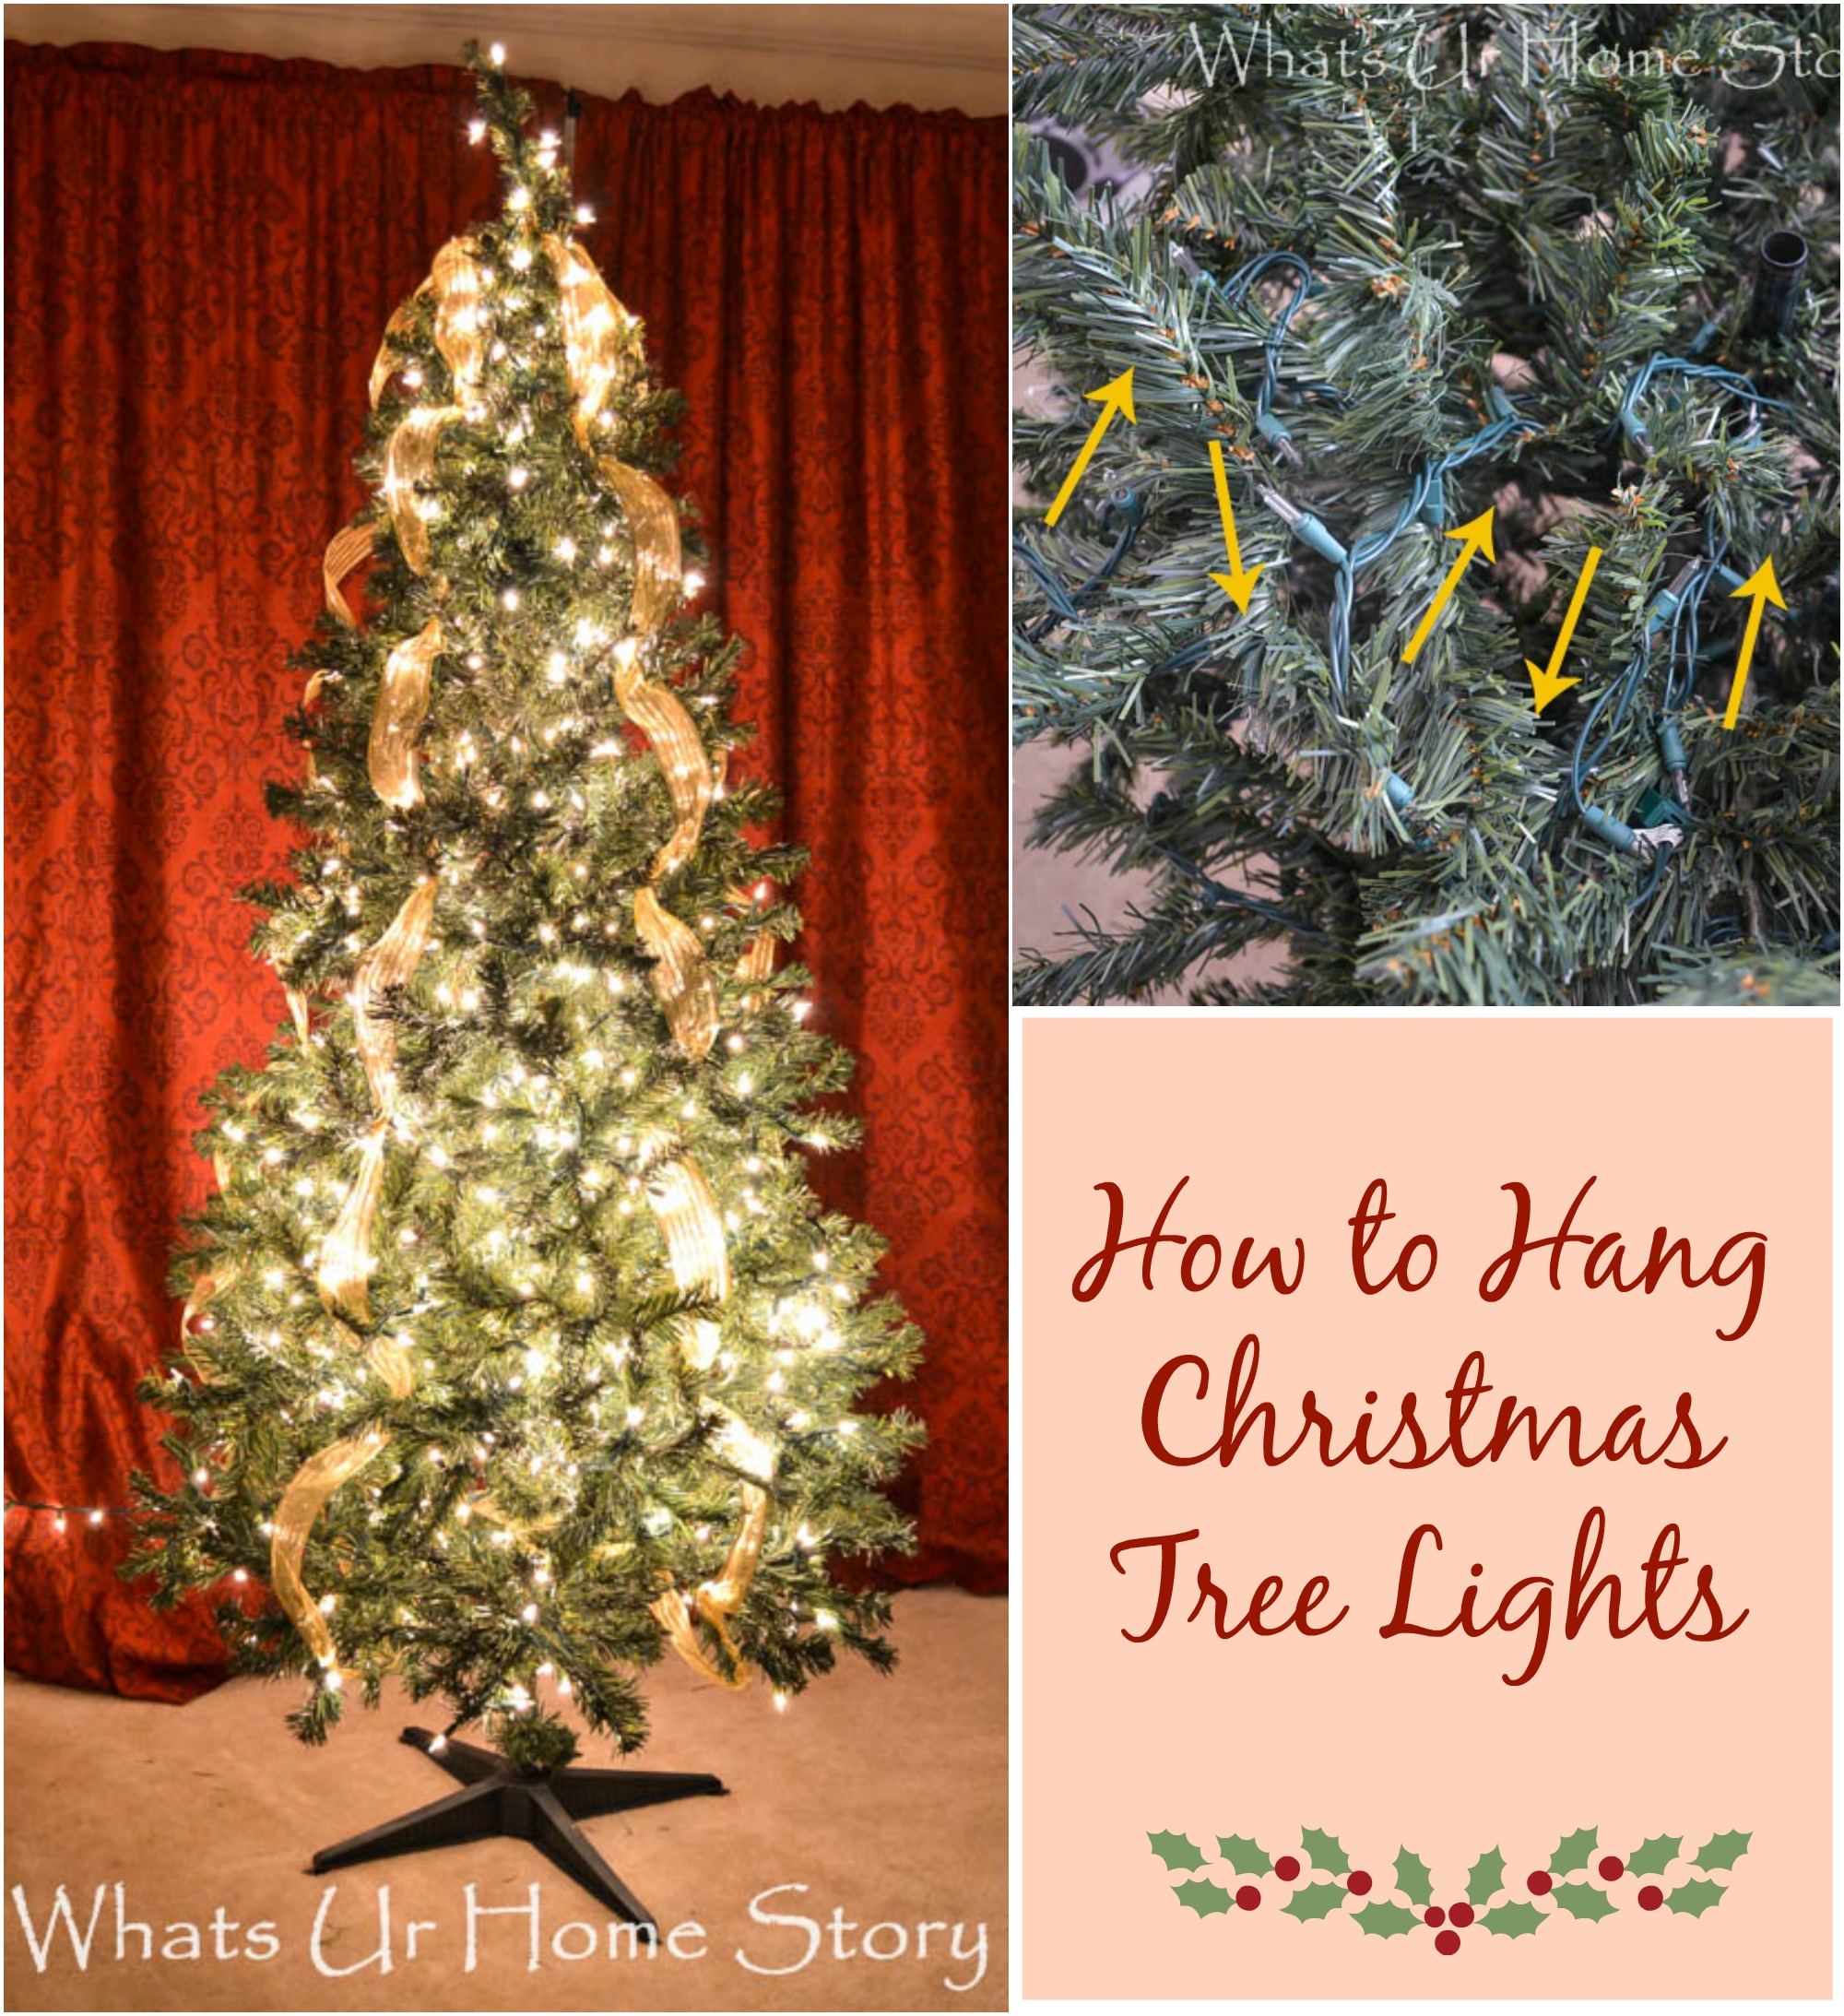 How to Hang Christmas Tree Lights - Whats Ur Home Story